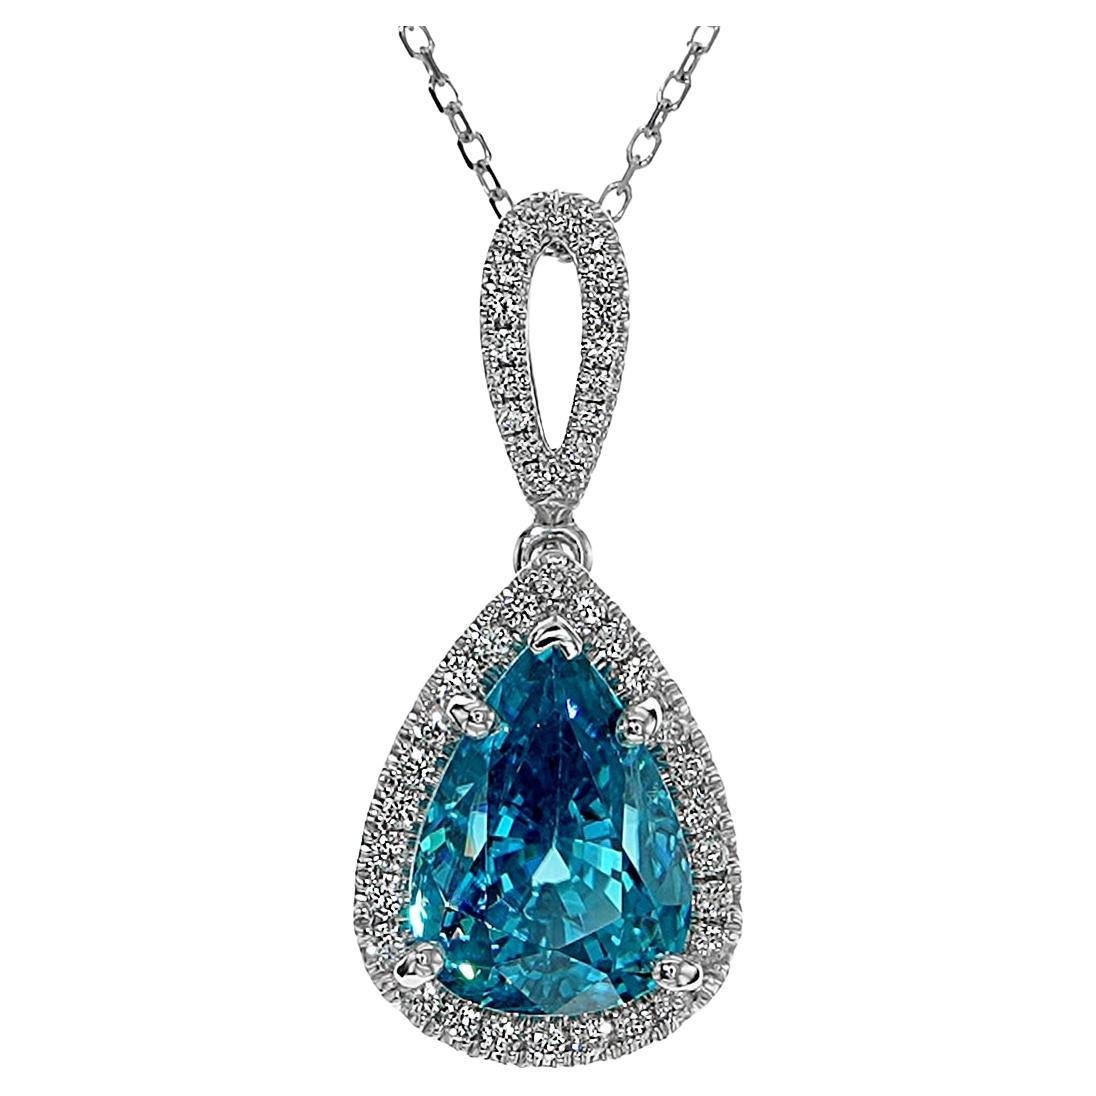 Pendentif en zircon bleu de 8,43 carats, diamants de 0,16 carat et chaîne 14KWG